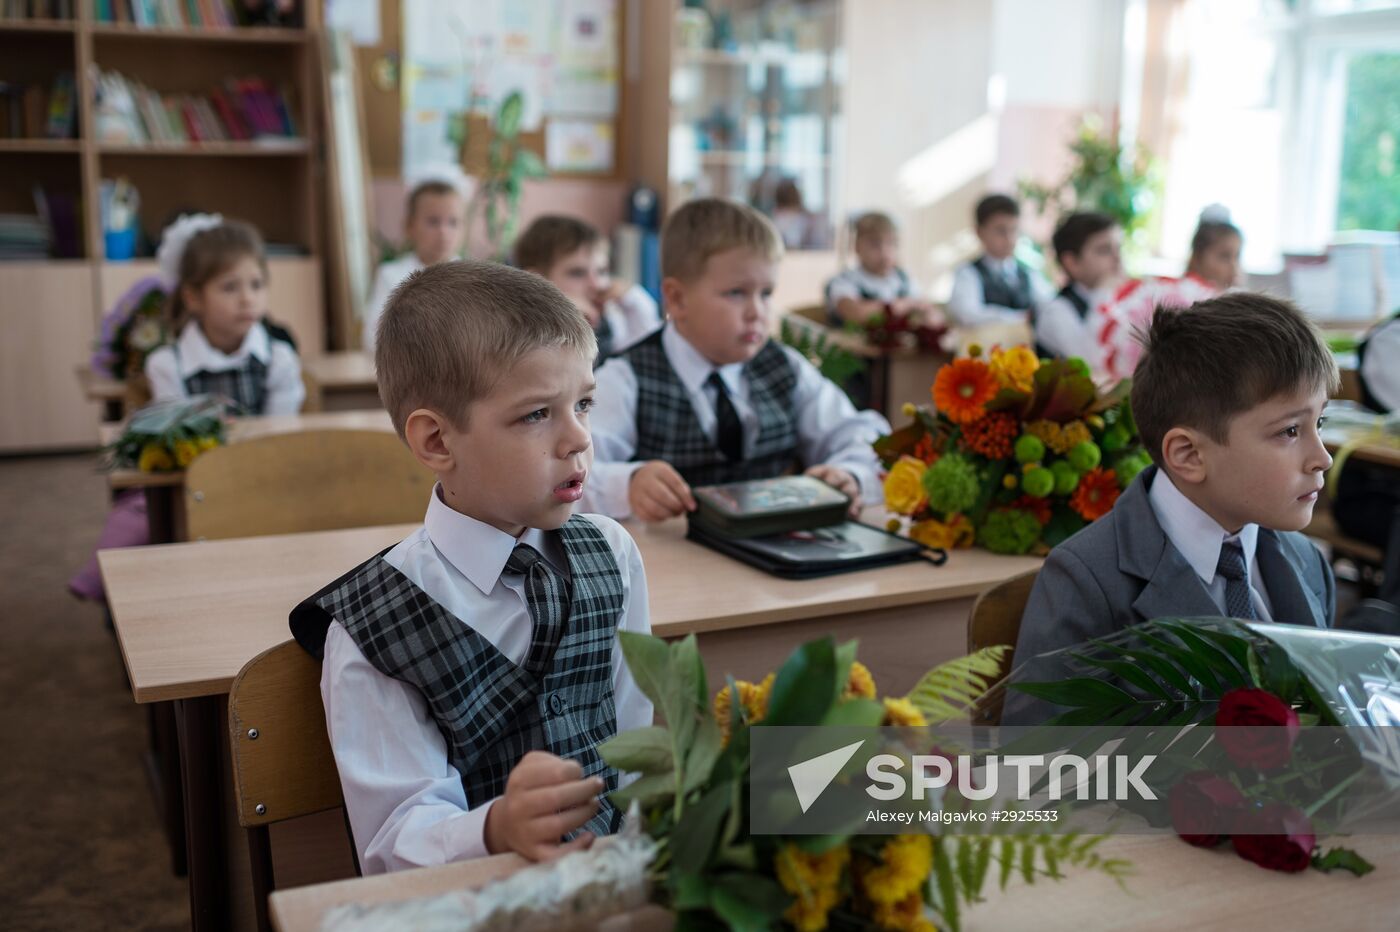 School year starts in Russia